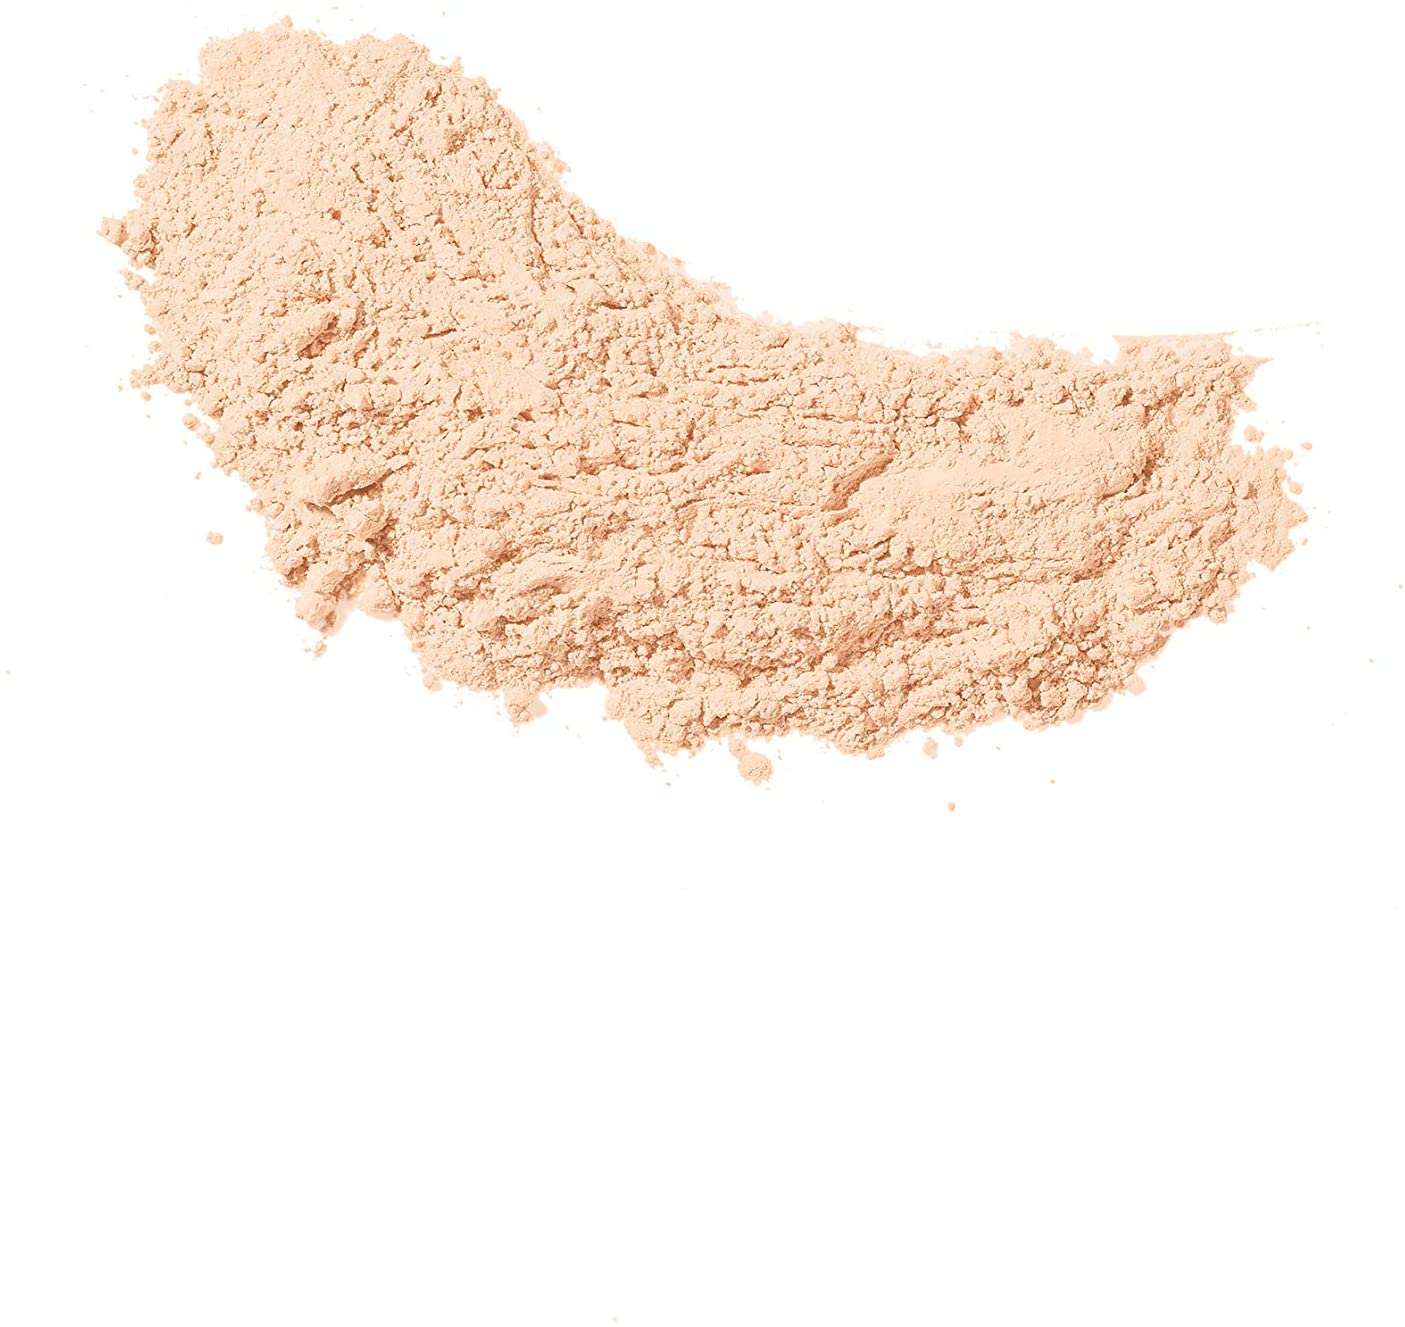 Coty Airspun Loose Face Powder 65g Translucent 070-24 | Ramfa Beauty